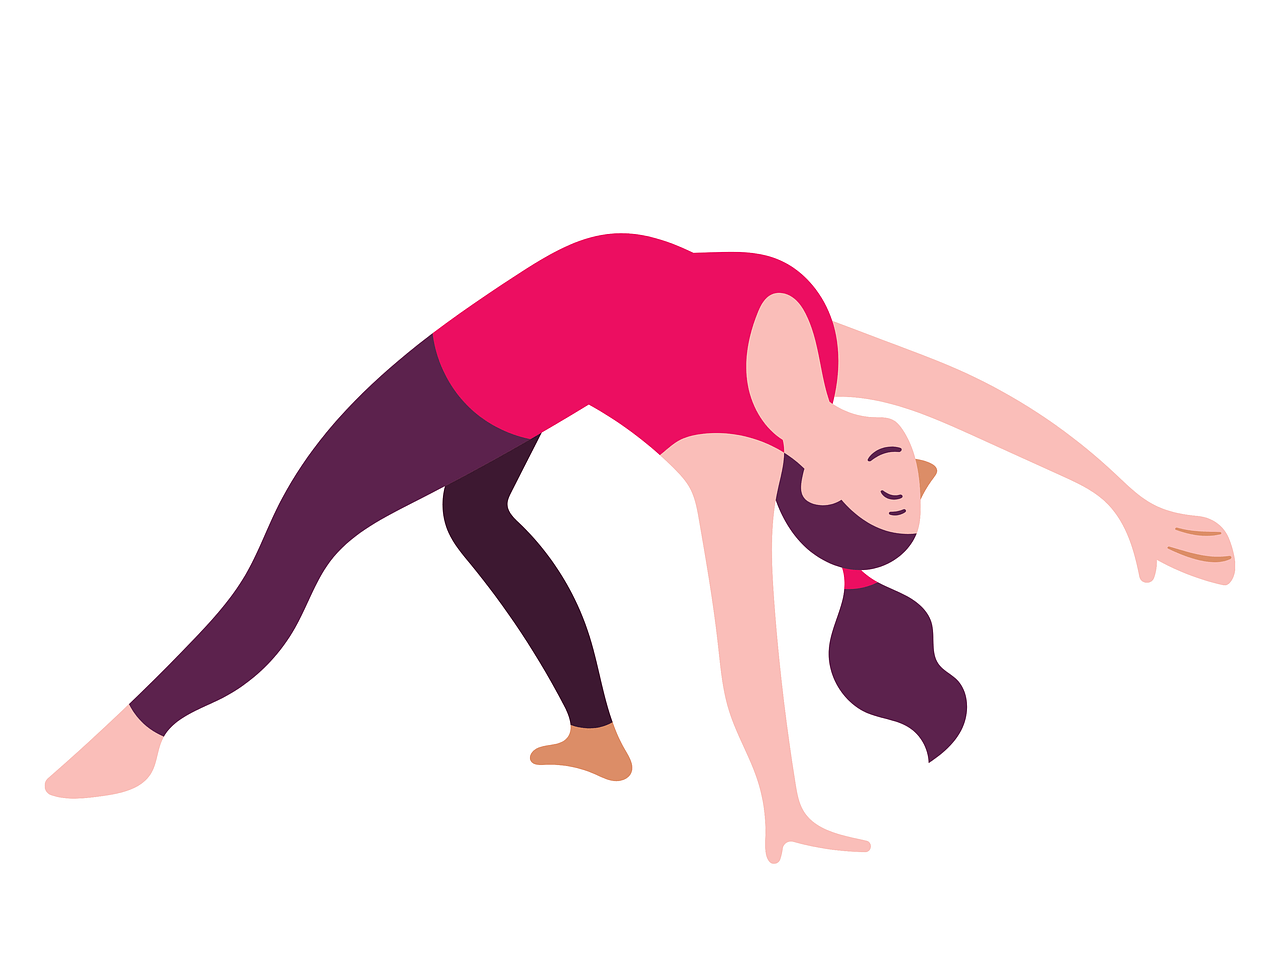 types of yoga